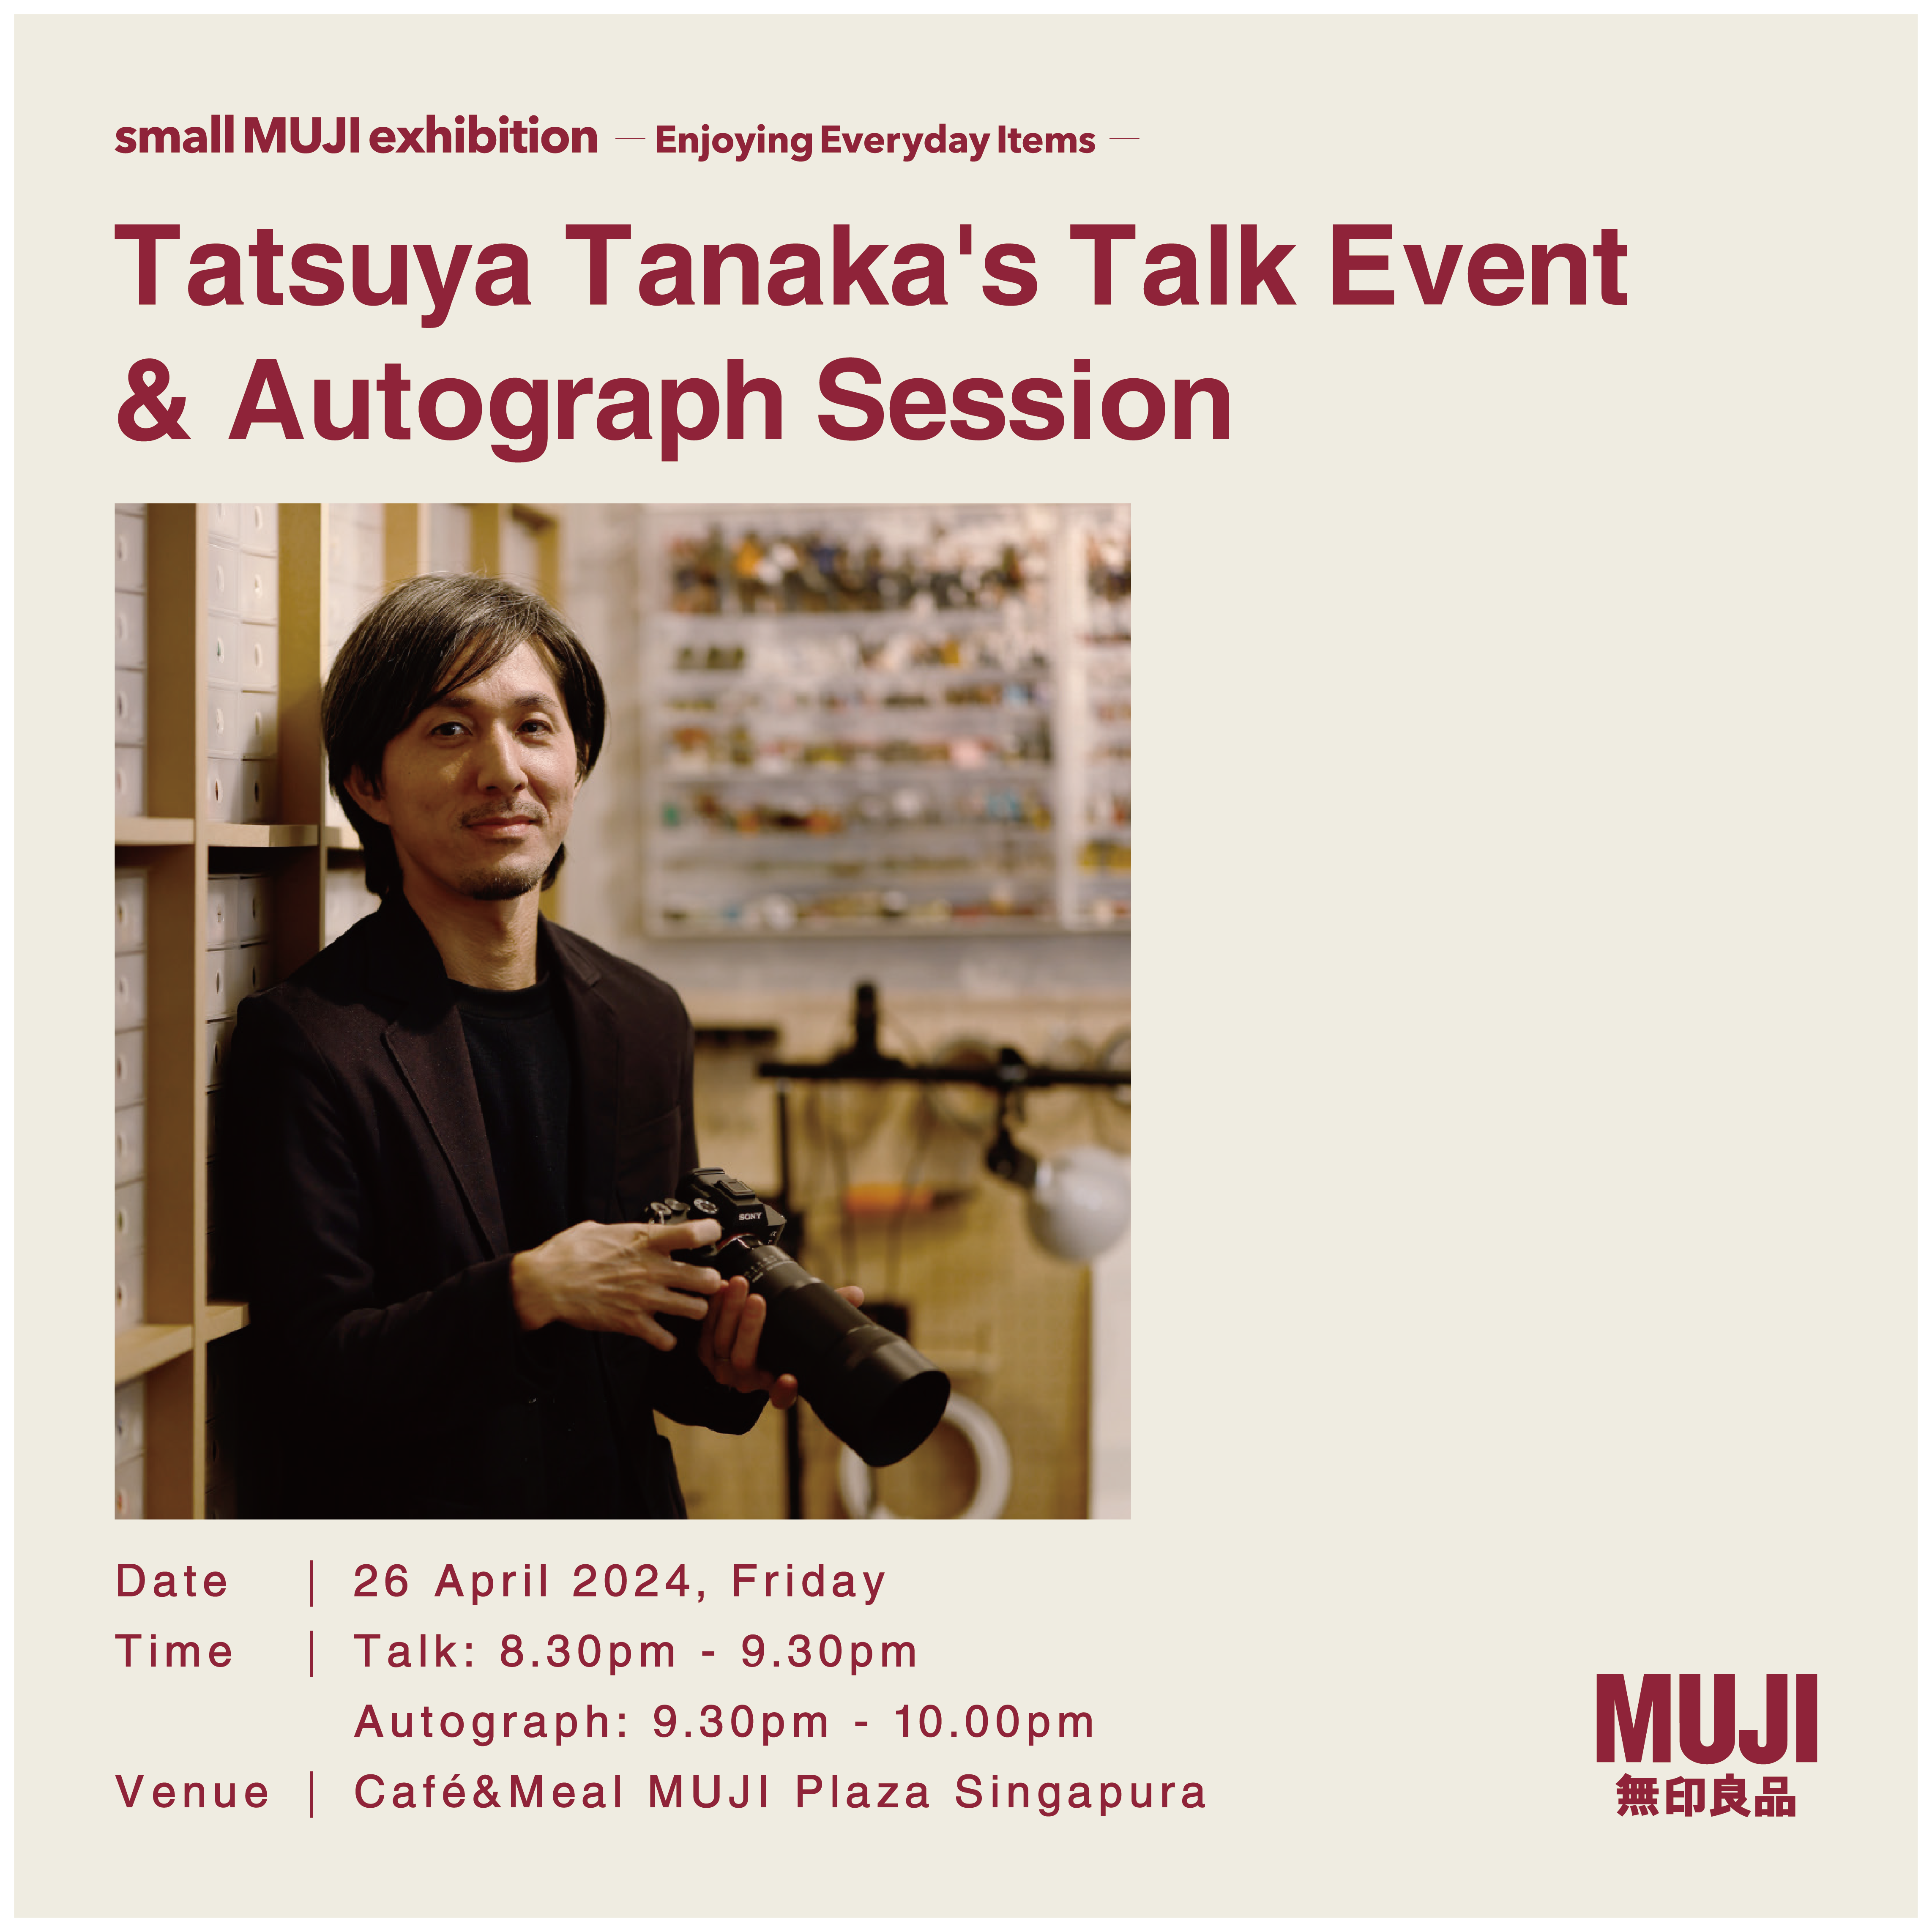 Tatsuya Tanaka's Talk Event & Autograph Session